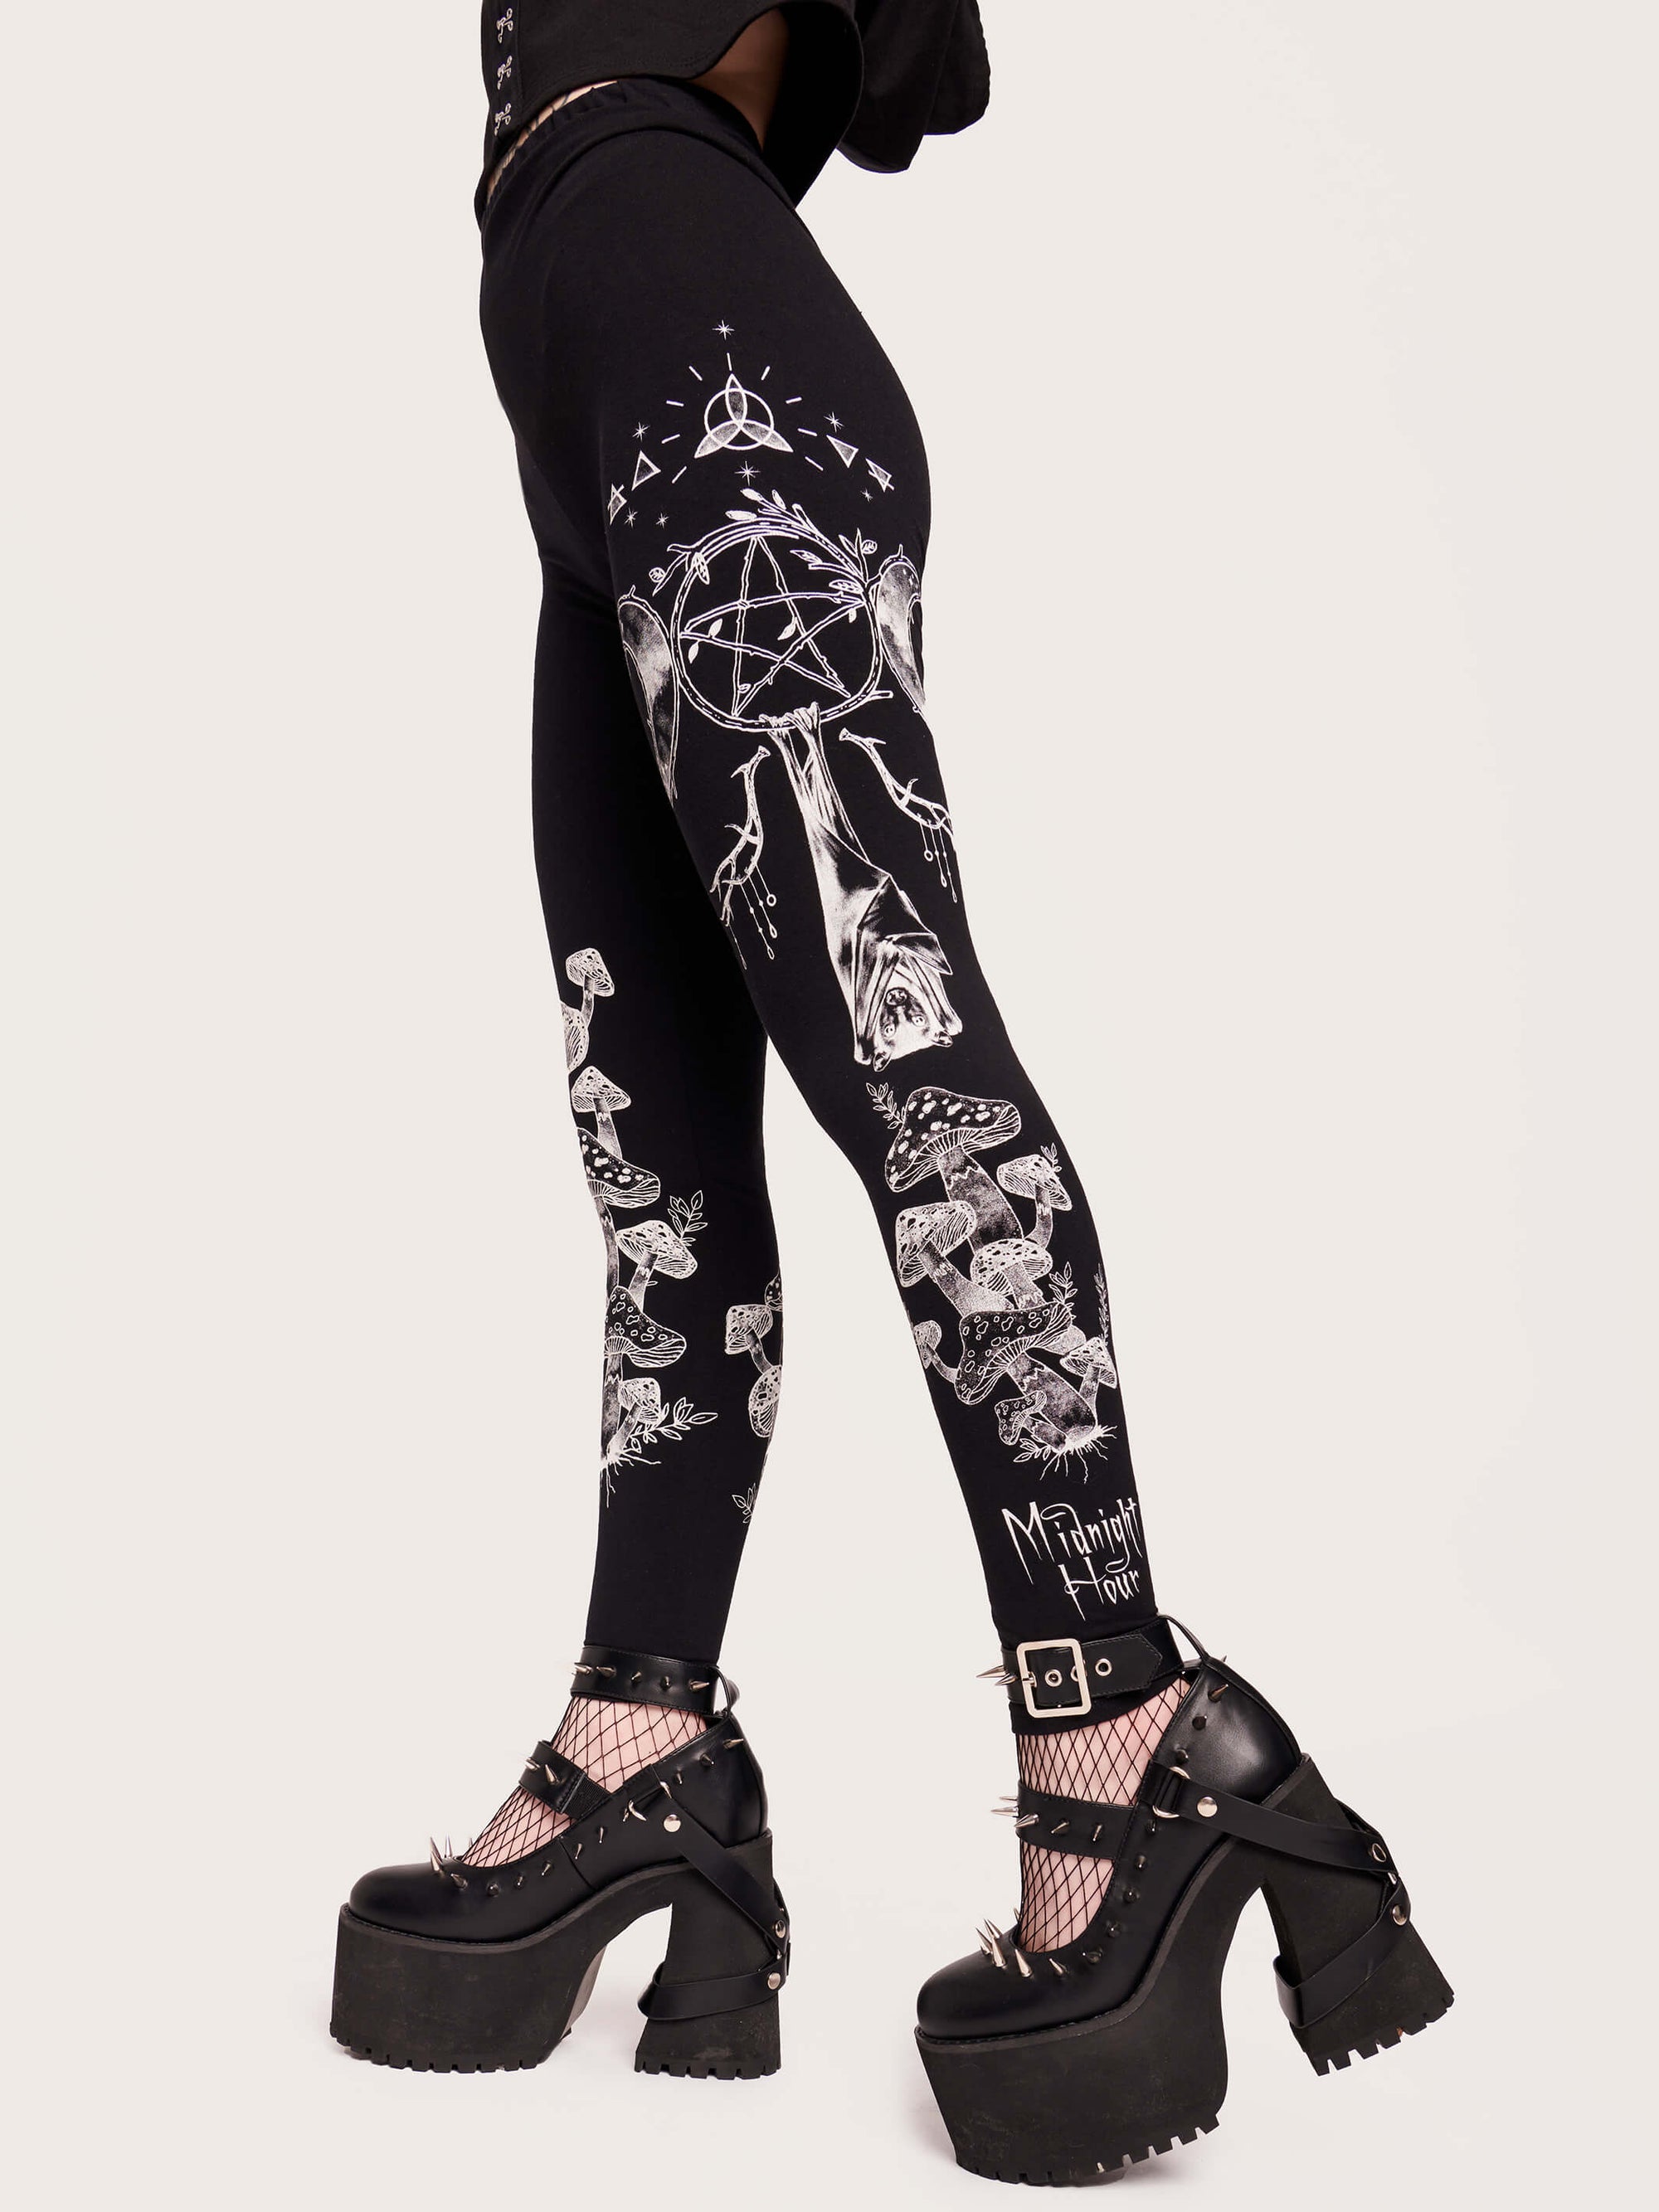 Black super soft and stretchy leggins with mushroom print, Sleeping bat, pantacleWitchy, Goth fashion, alt girl fashion, goth clothing , witchy clothing, egirl fashion, gothic fashion, dark aesthetic.